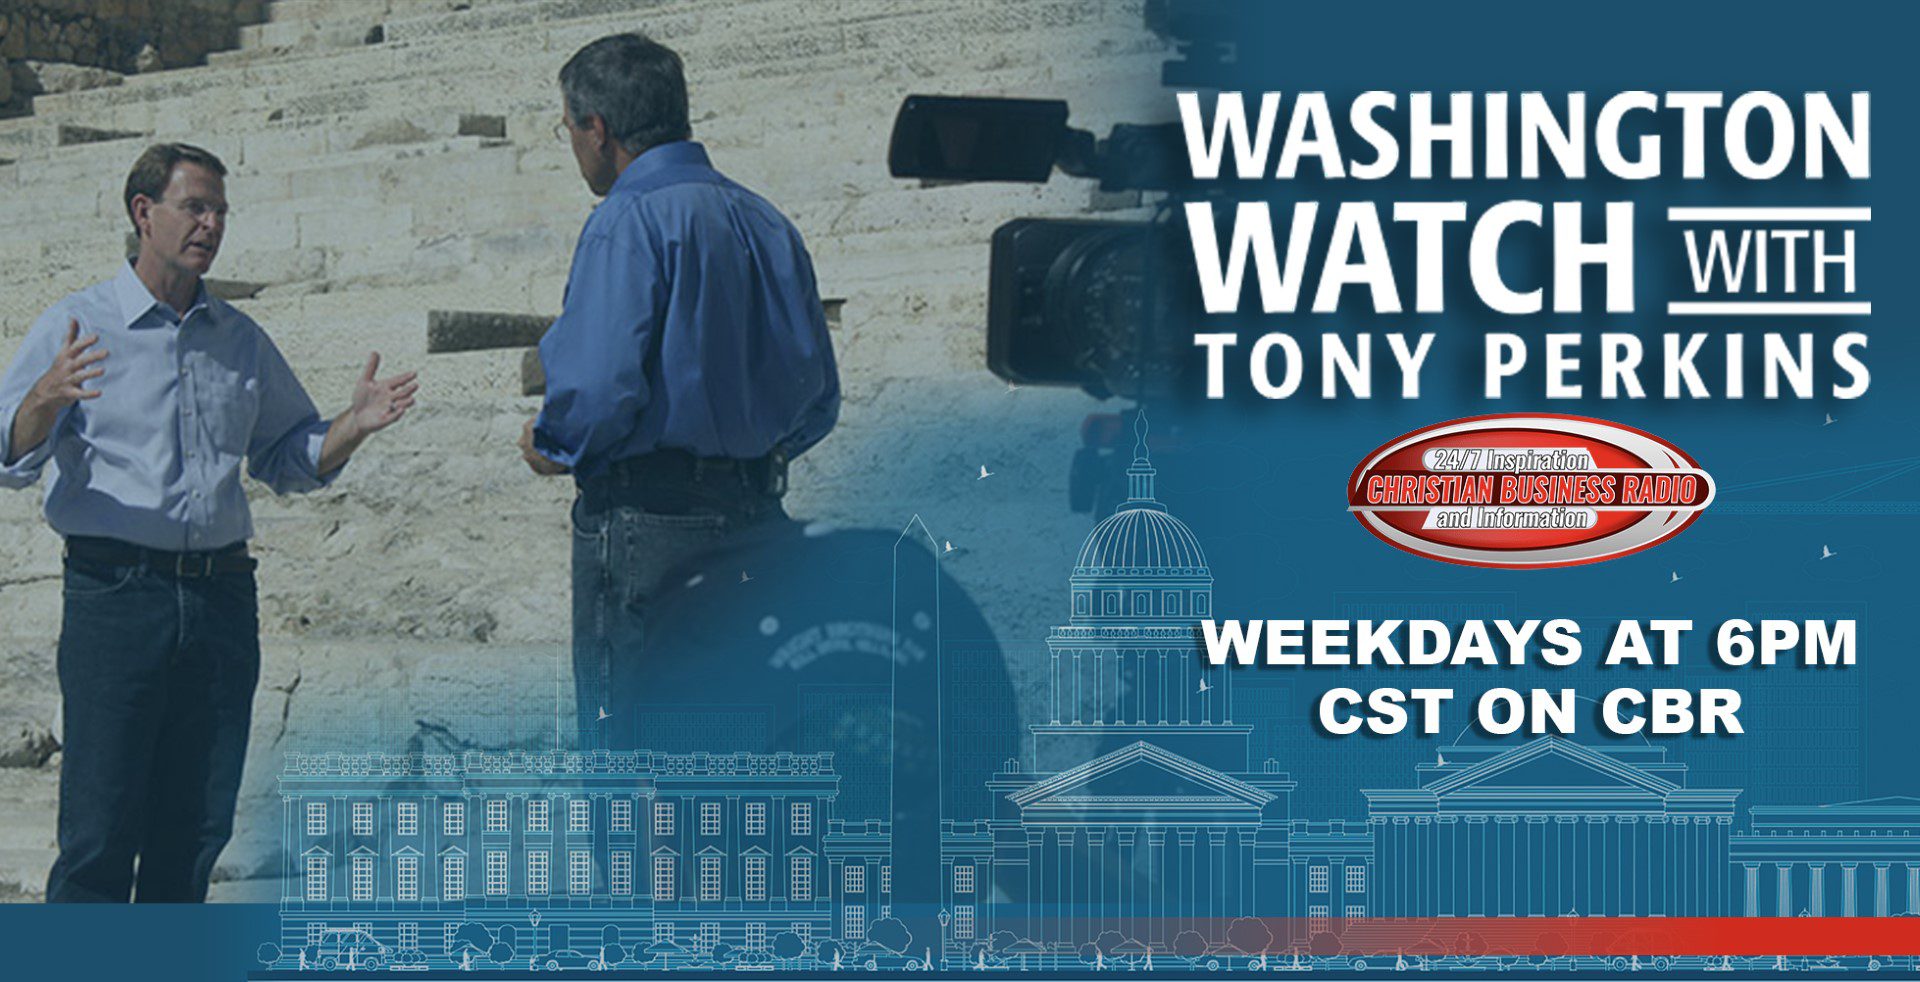 Washington Watch with Tony Perkins | CBR Christian Business Radio